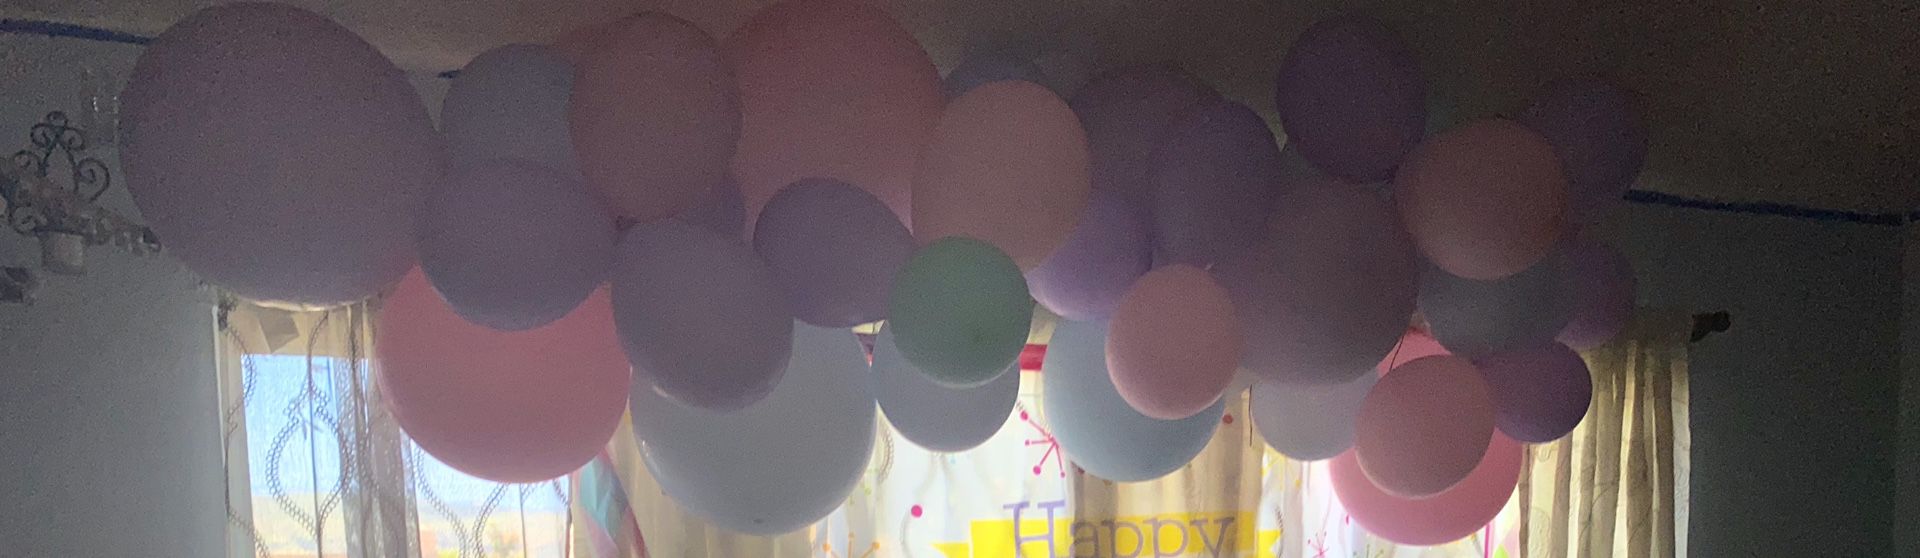 Balloon garland kit